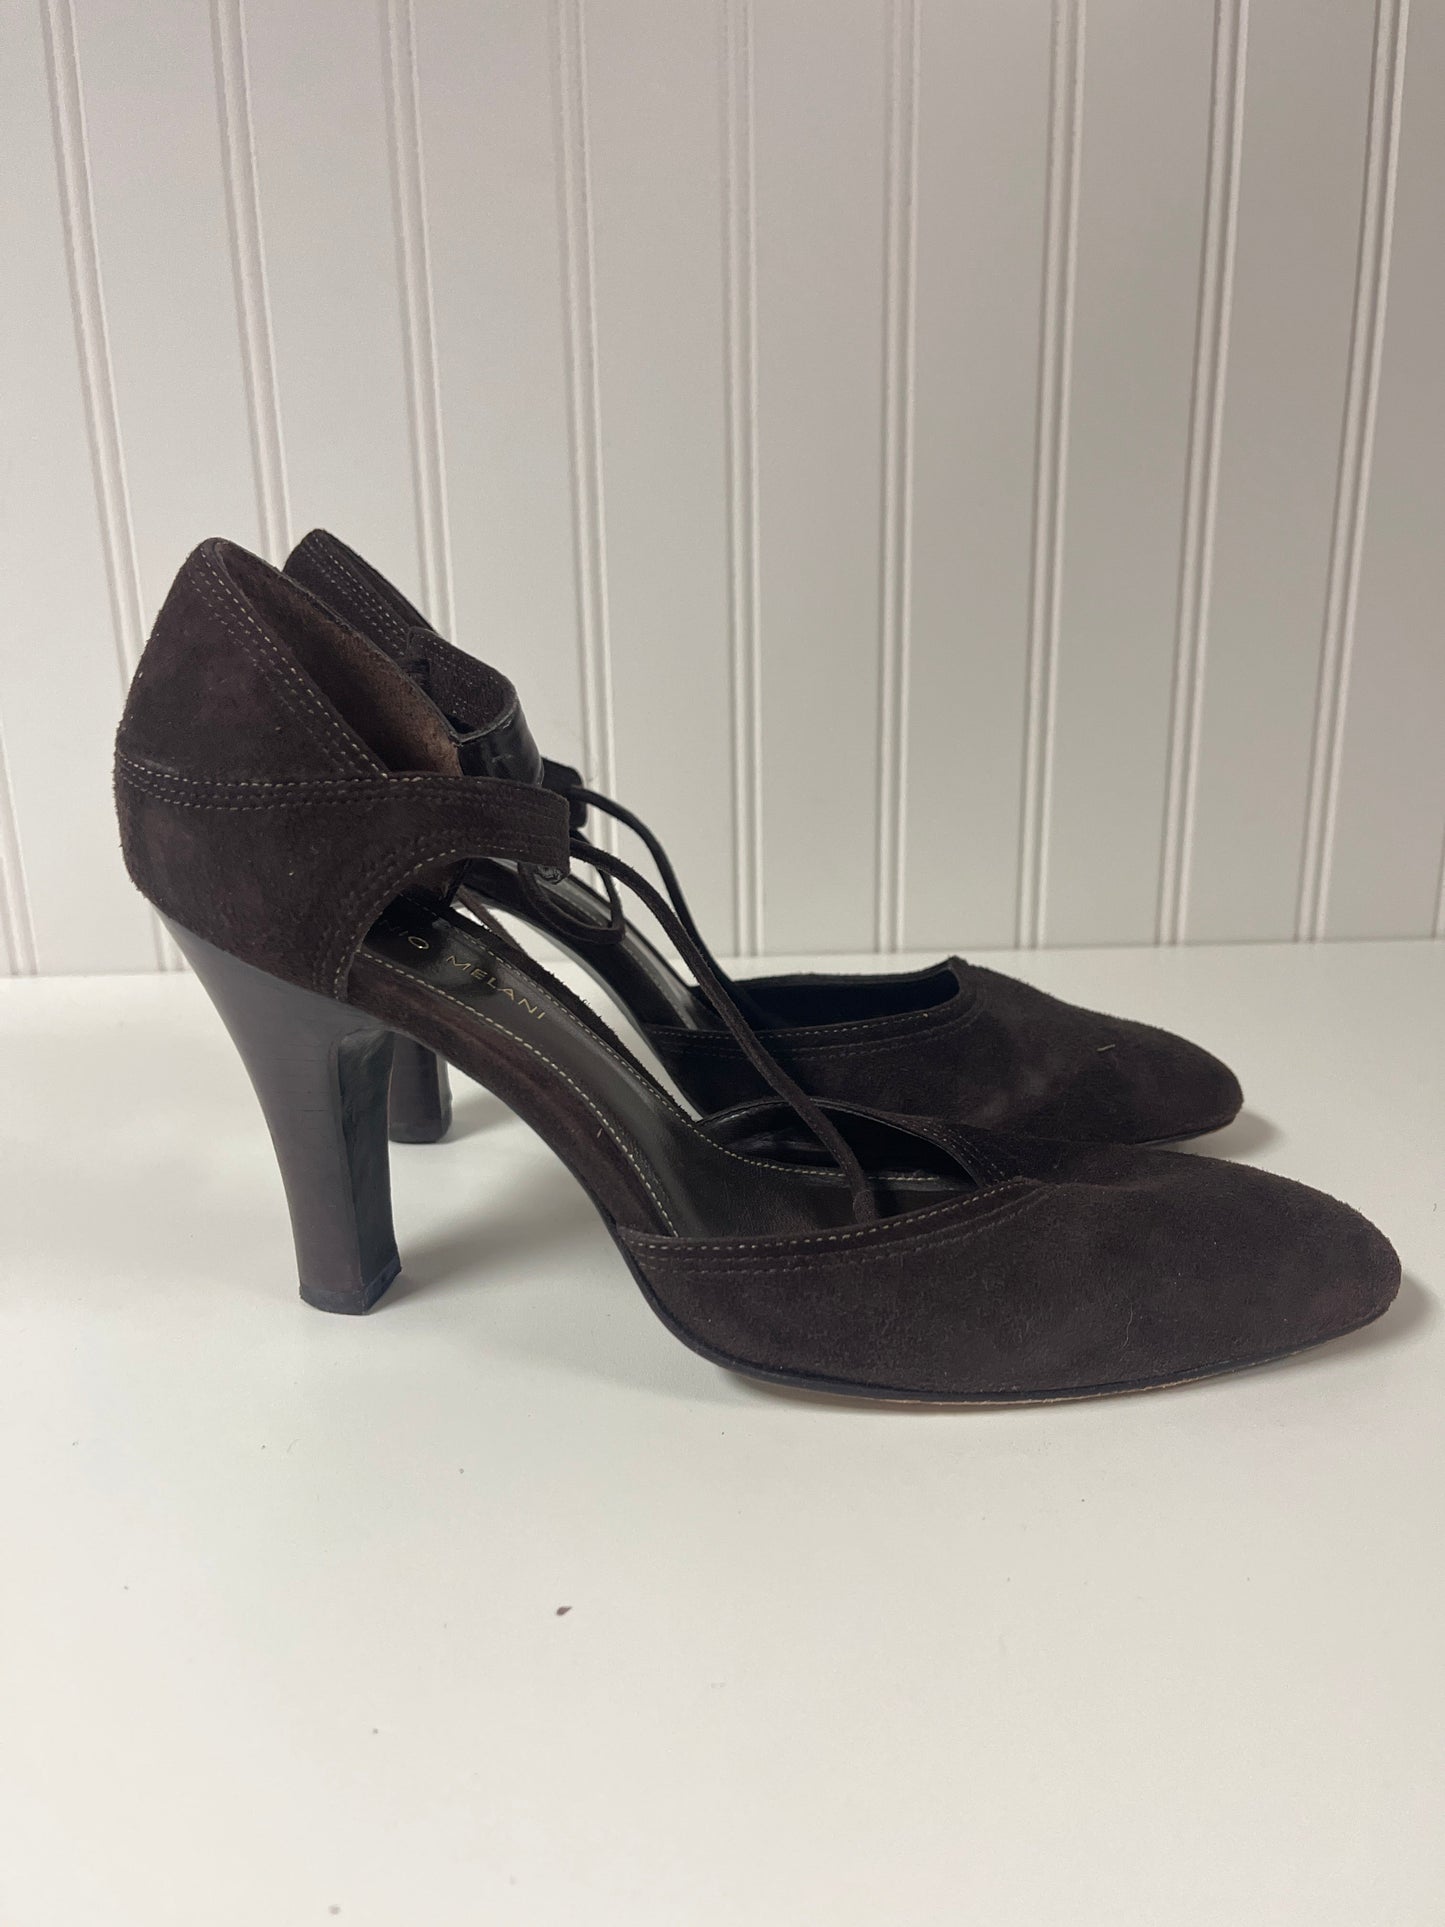 Shoes Heels Stiletto By Antonio Melani  Size: 8